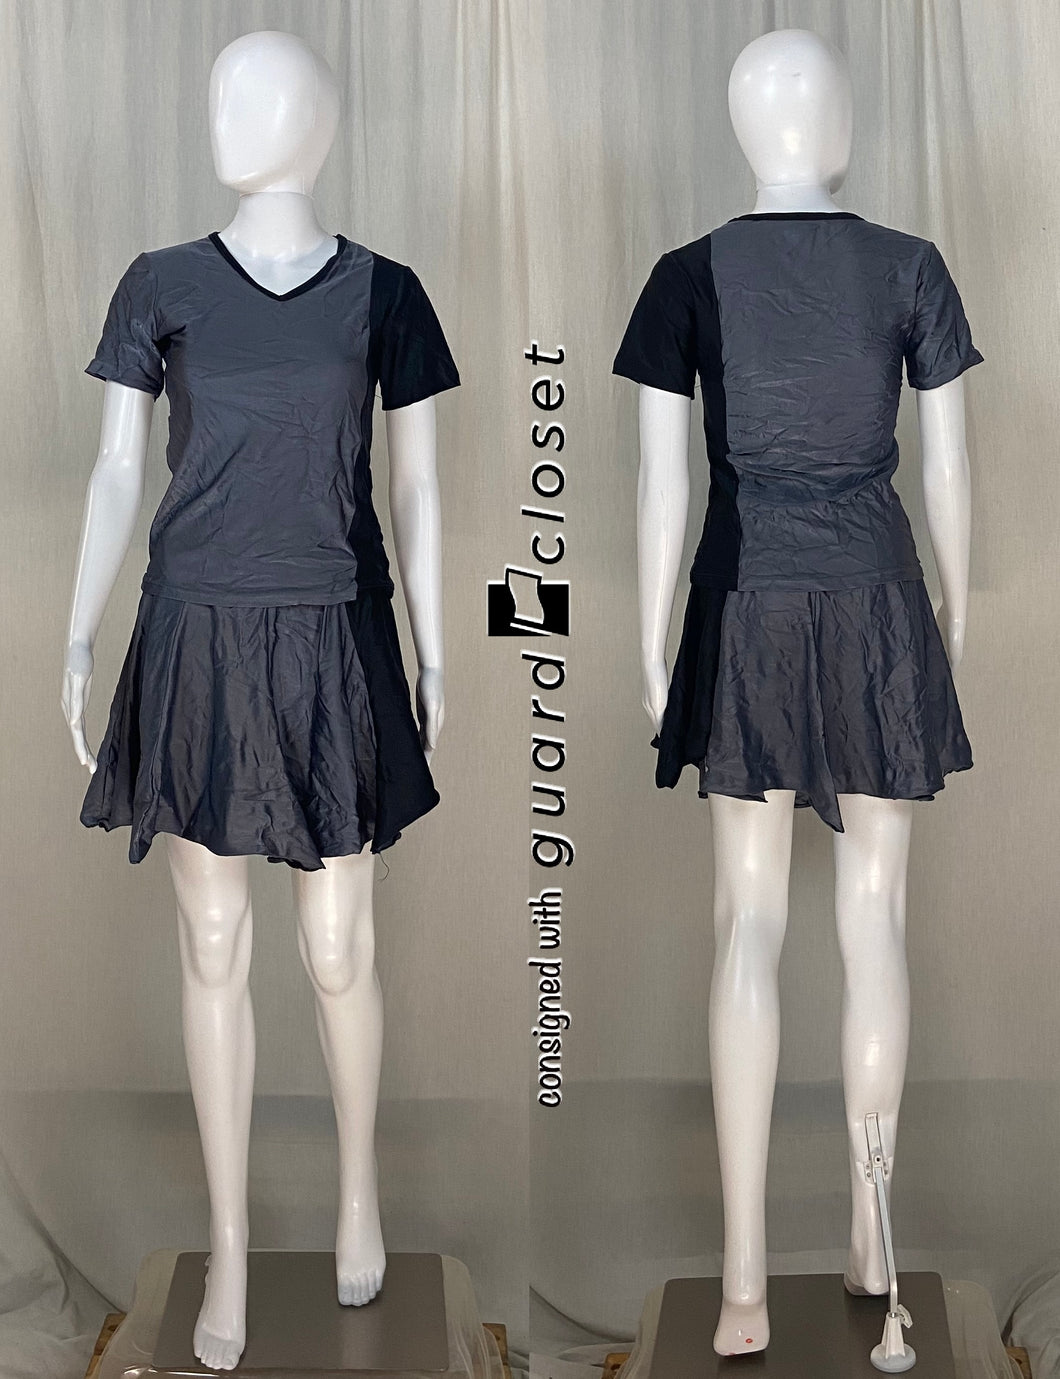 24 black gray short sleeve tops + 20 black gray skirts